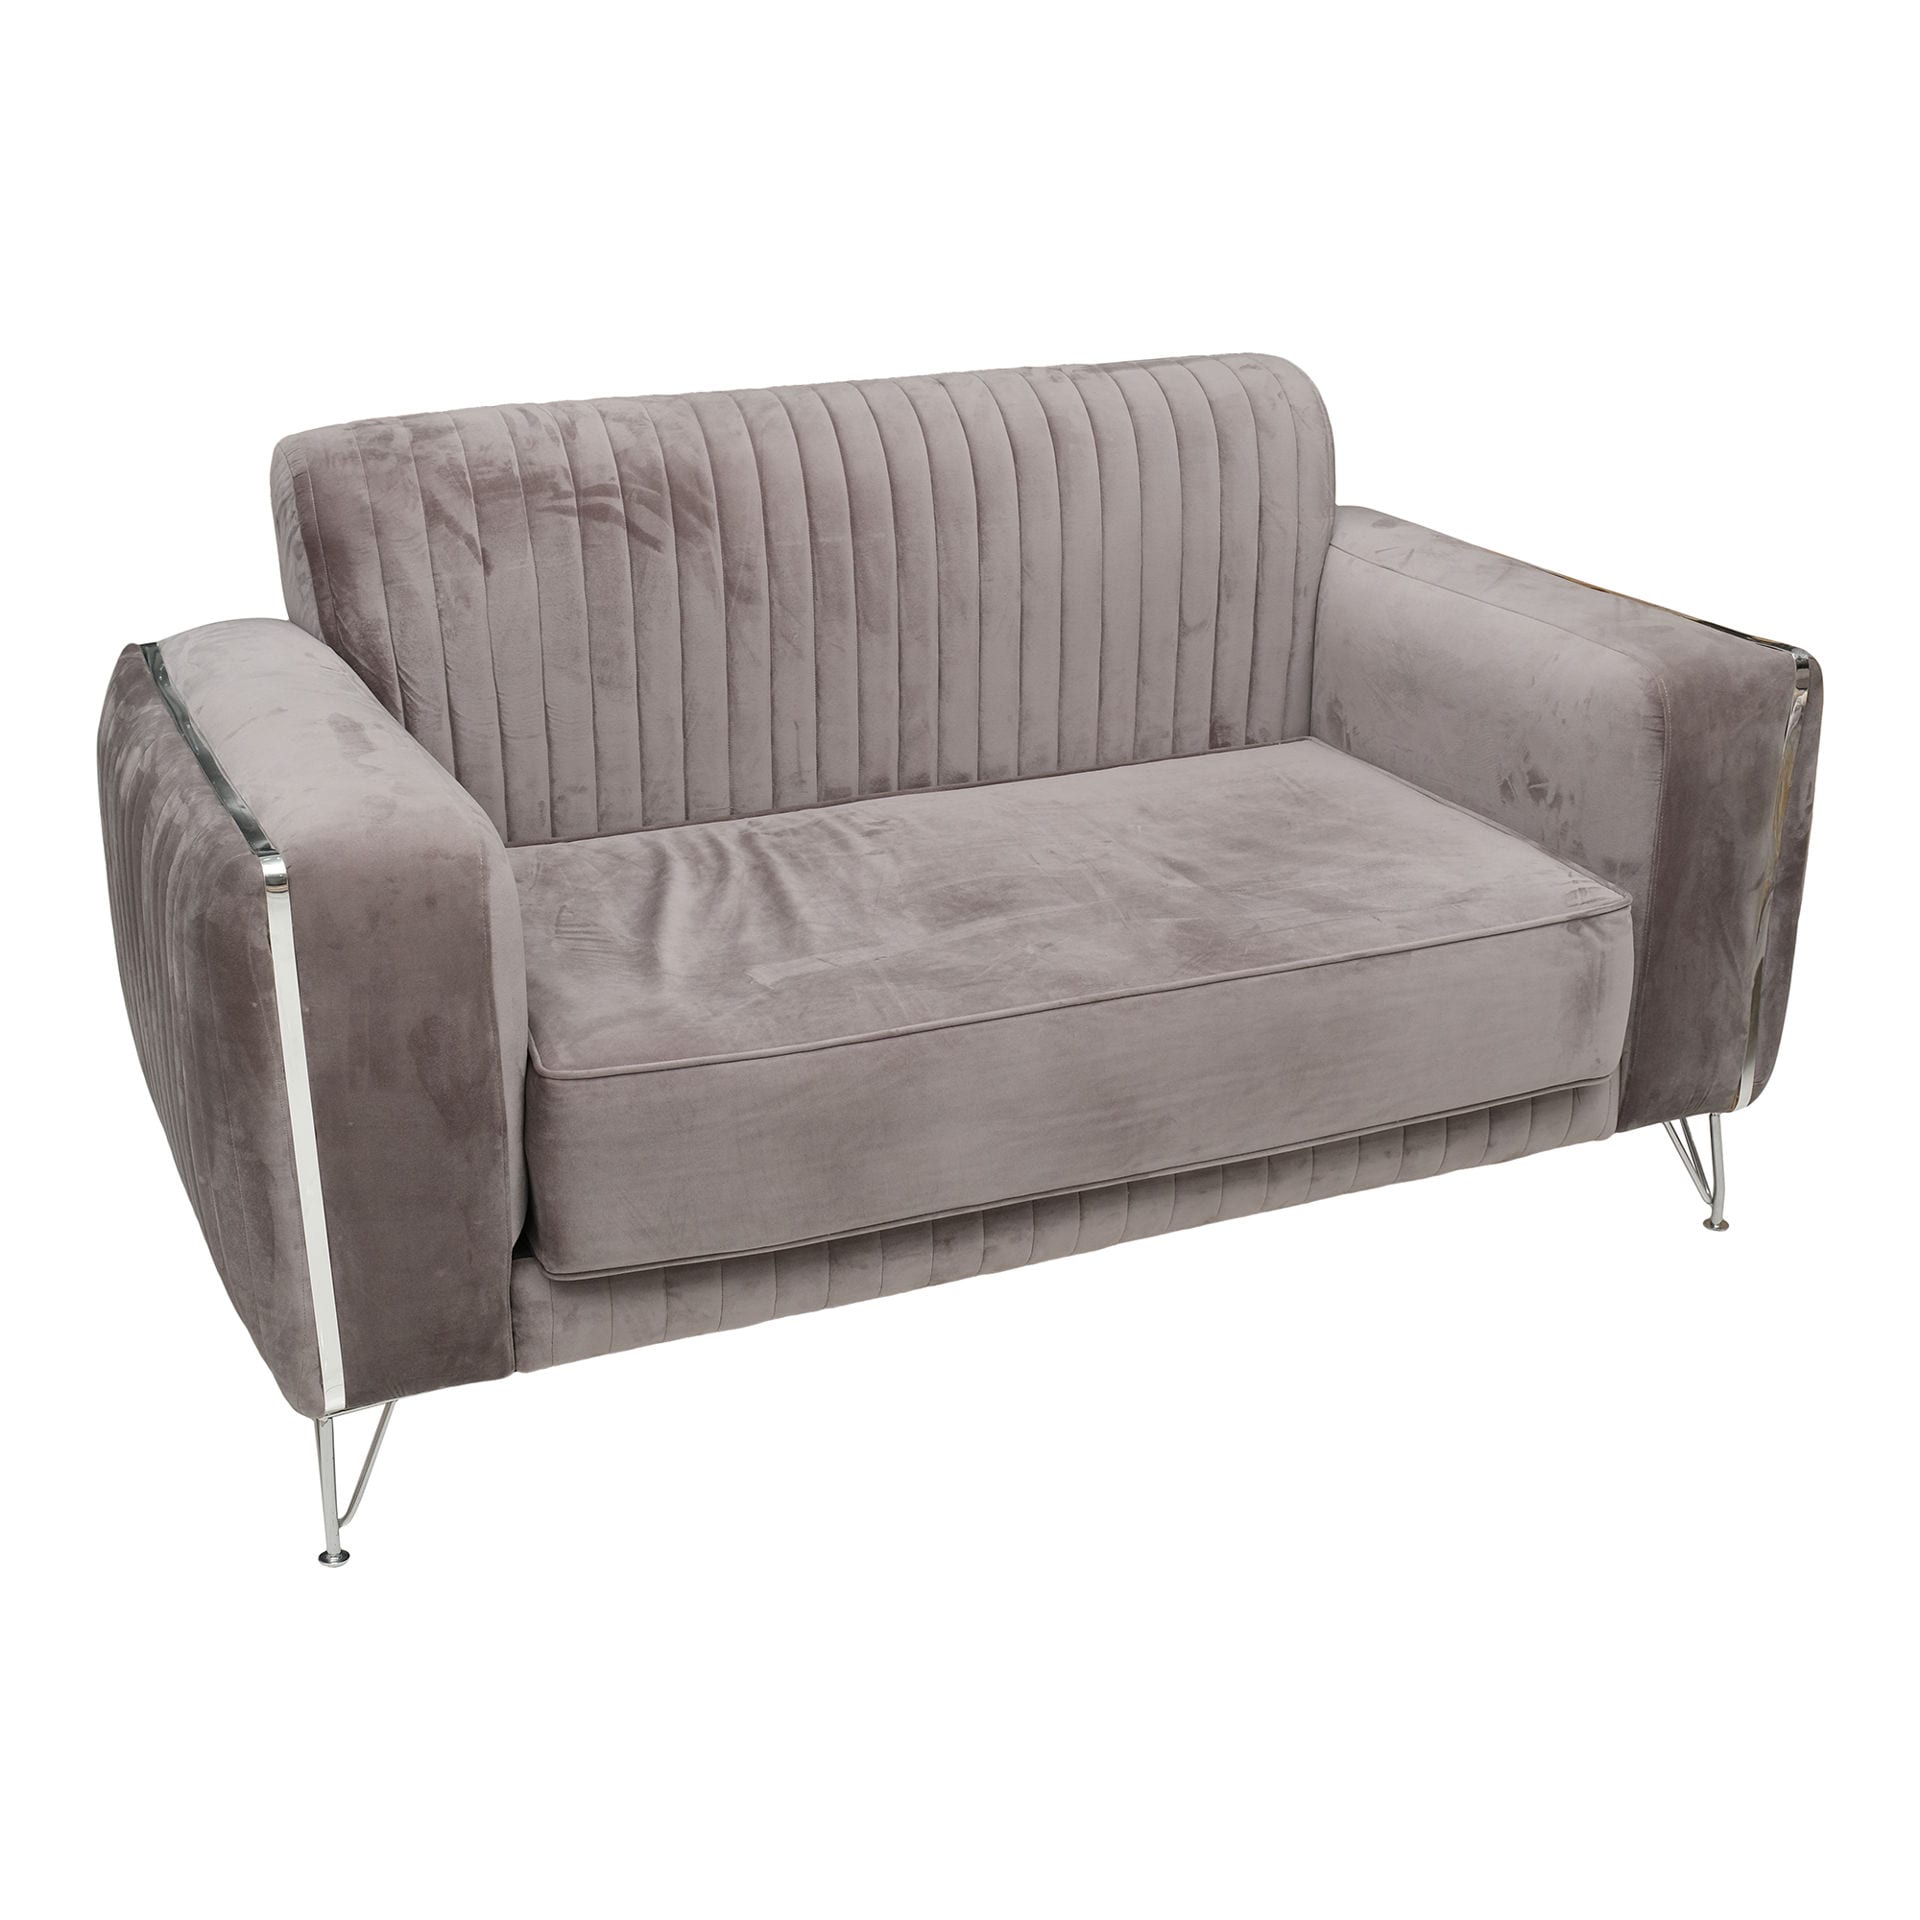 Shop Hscf HSCF Velvette Fabric 2 Seater Sofa, Light Grey | Dragon Mart UAE